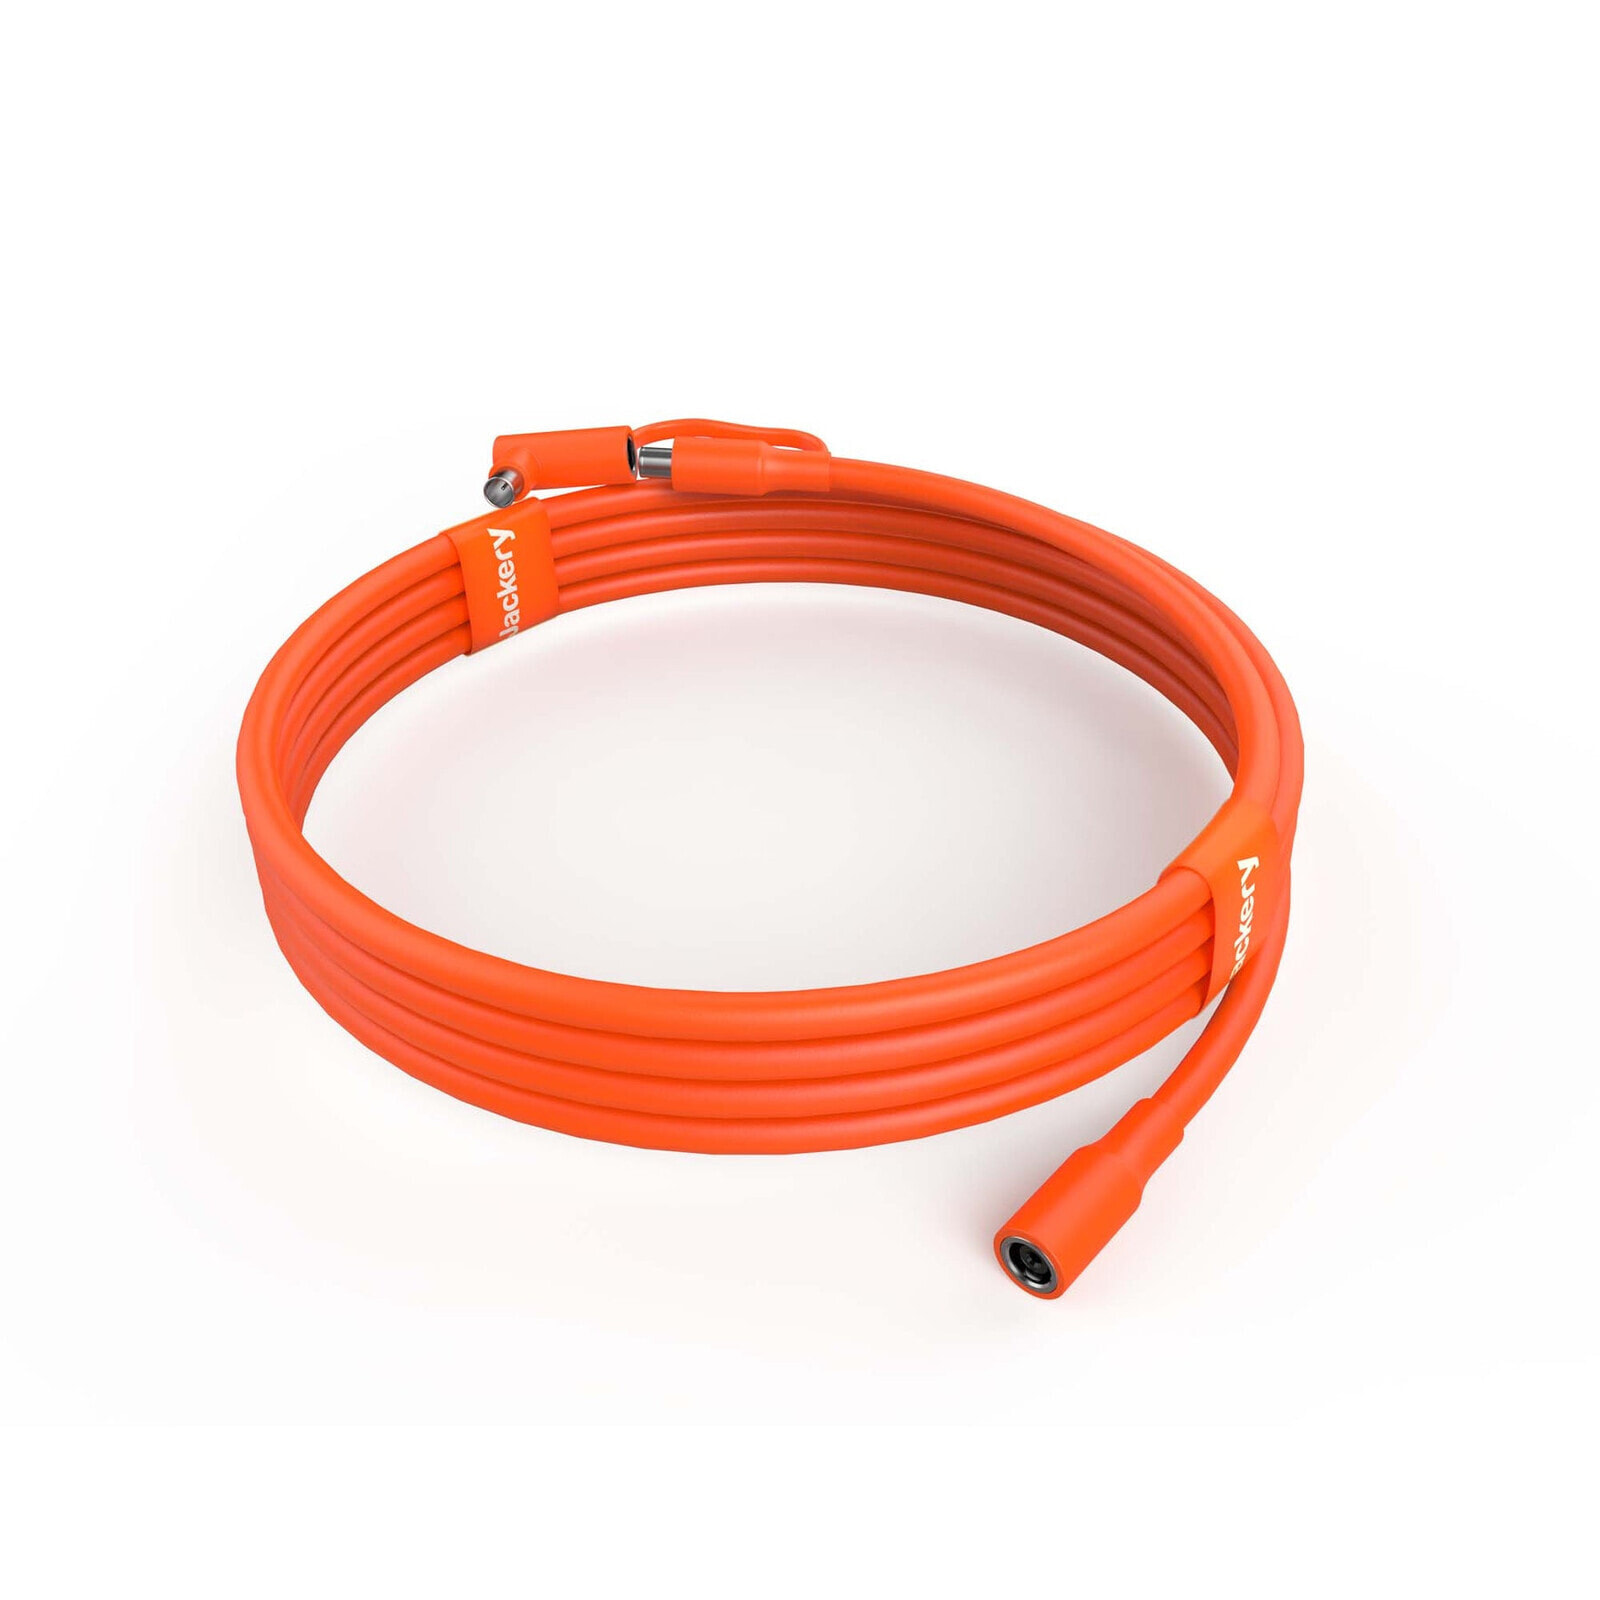 JK-HTO728 - 5 m - Cable - Extension Cable 5 m - Copper Wire